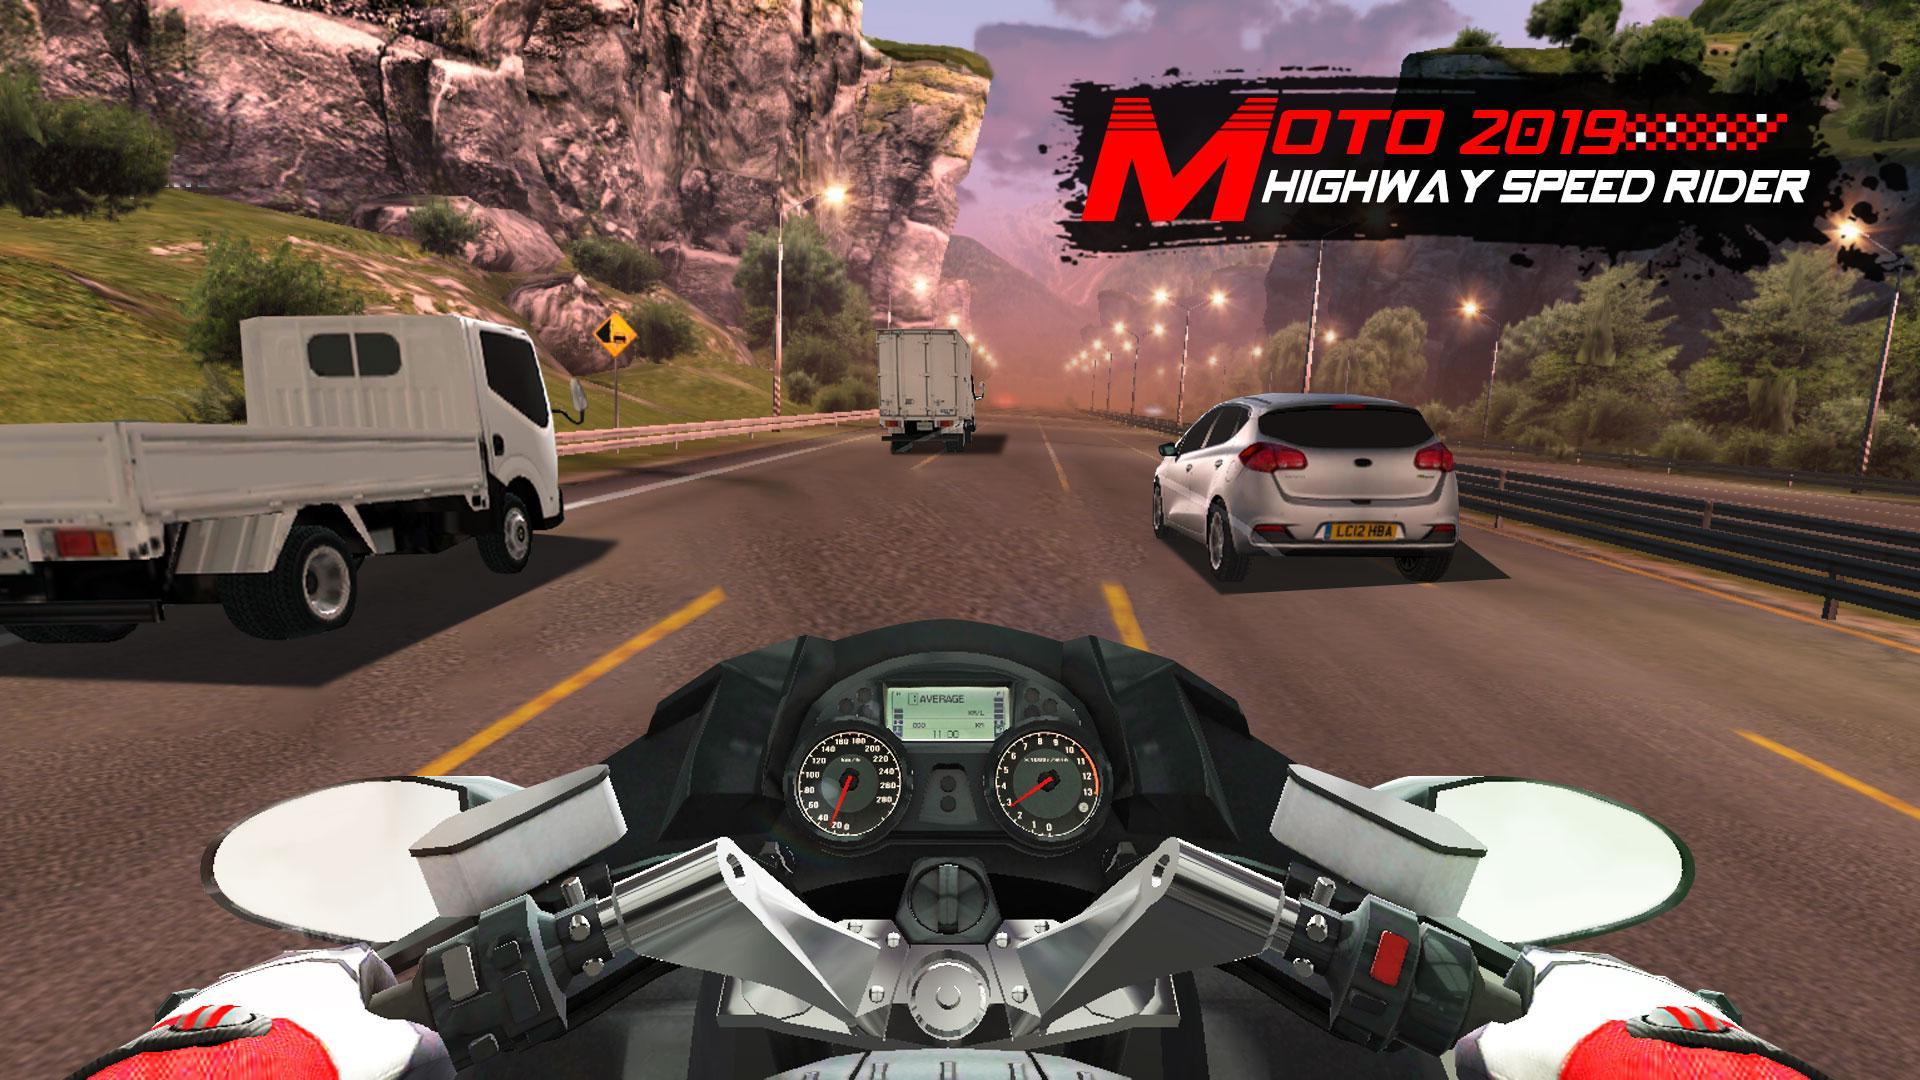 Screenshot of Moto 2019 - Highway Speed Rider